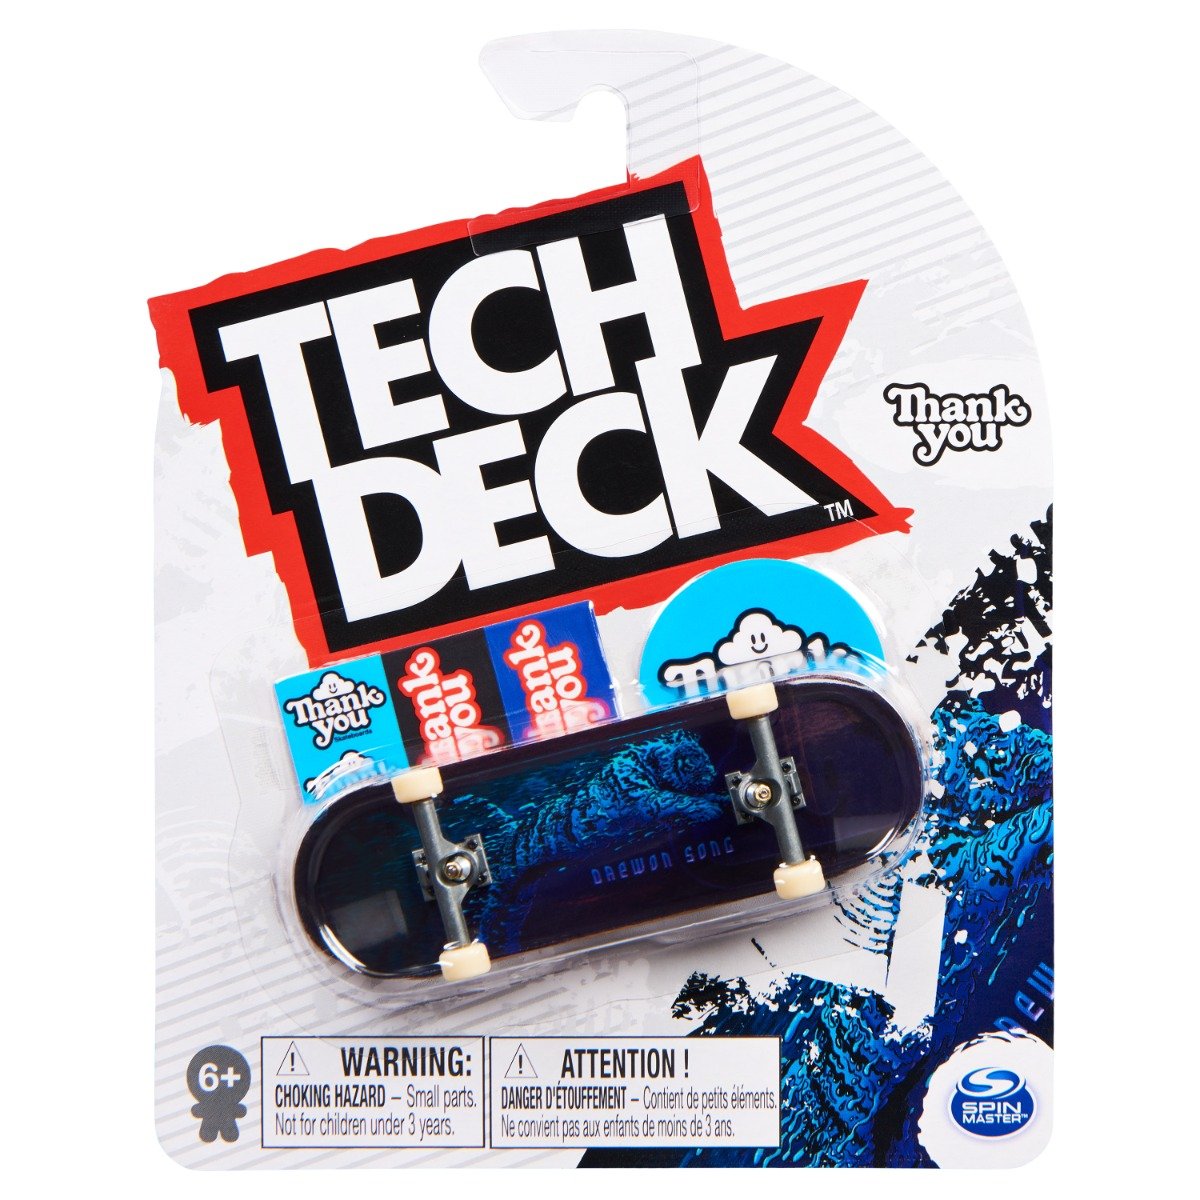 Mini placa skateboard Tech Deck, Thank You Daewon Song, 20141226